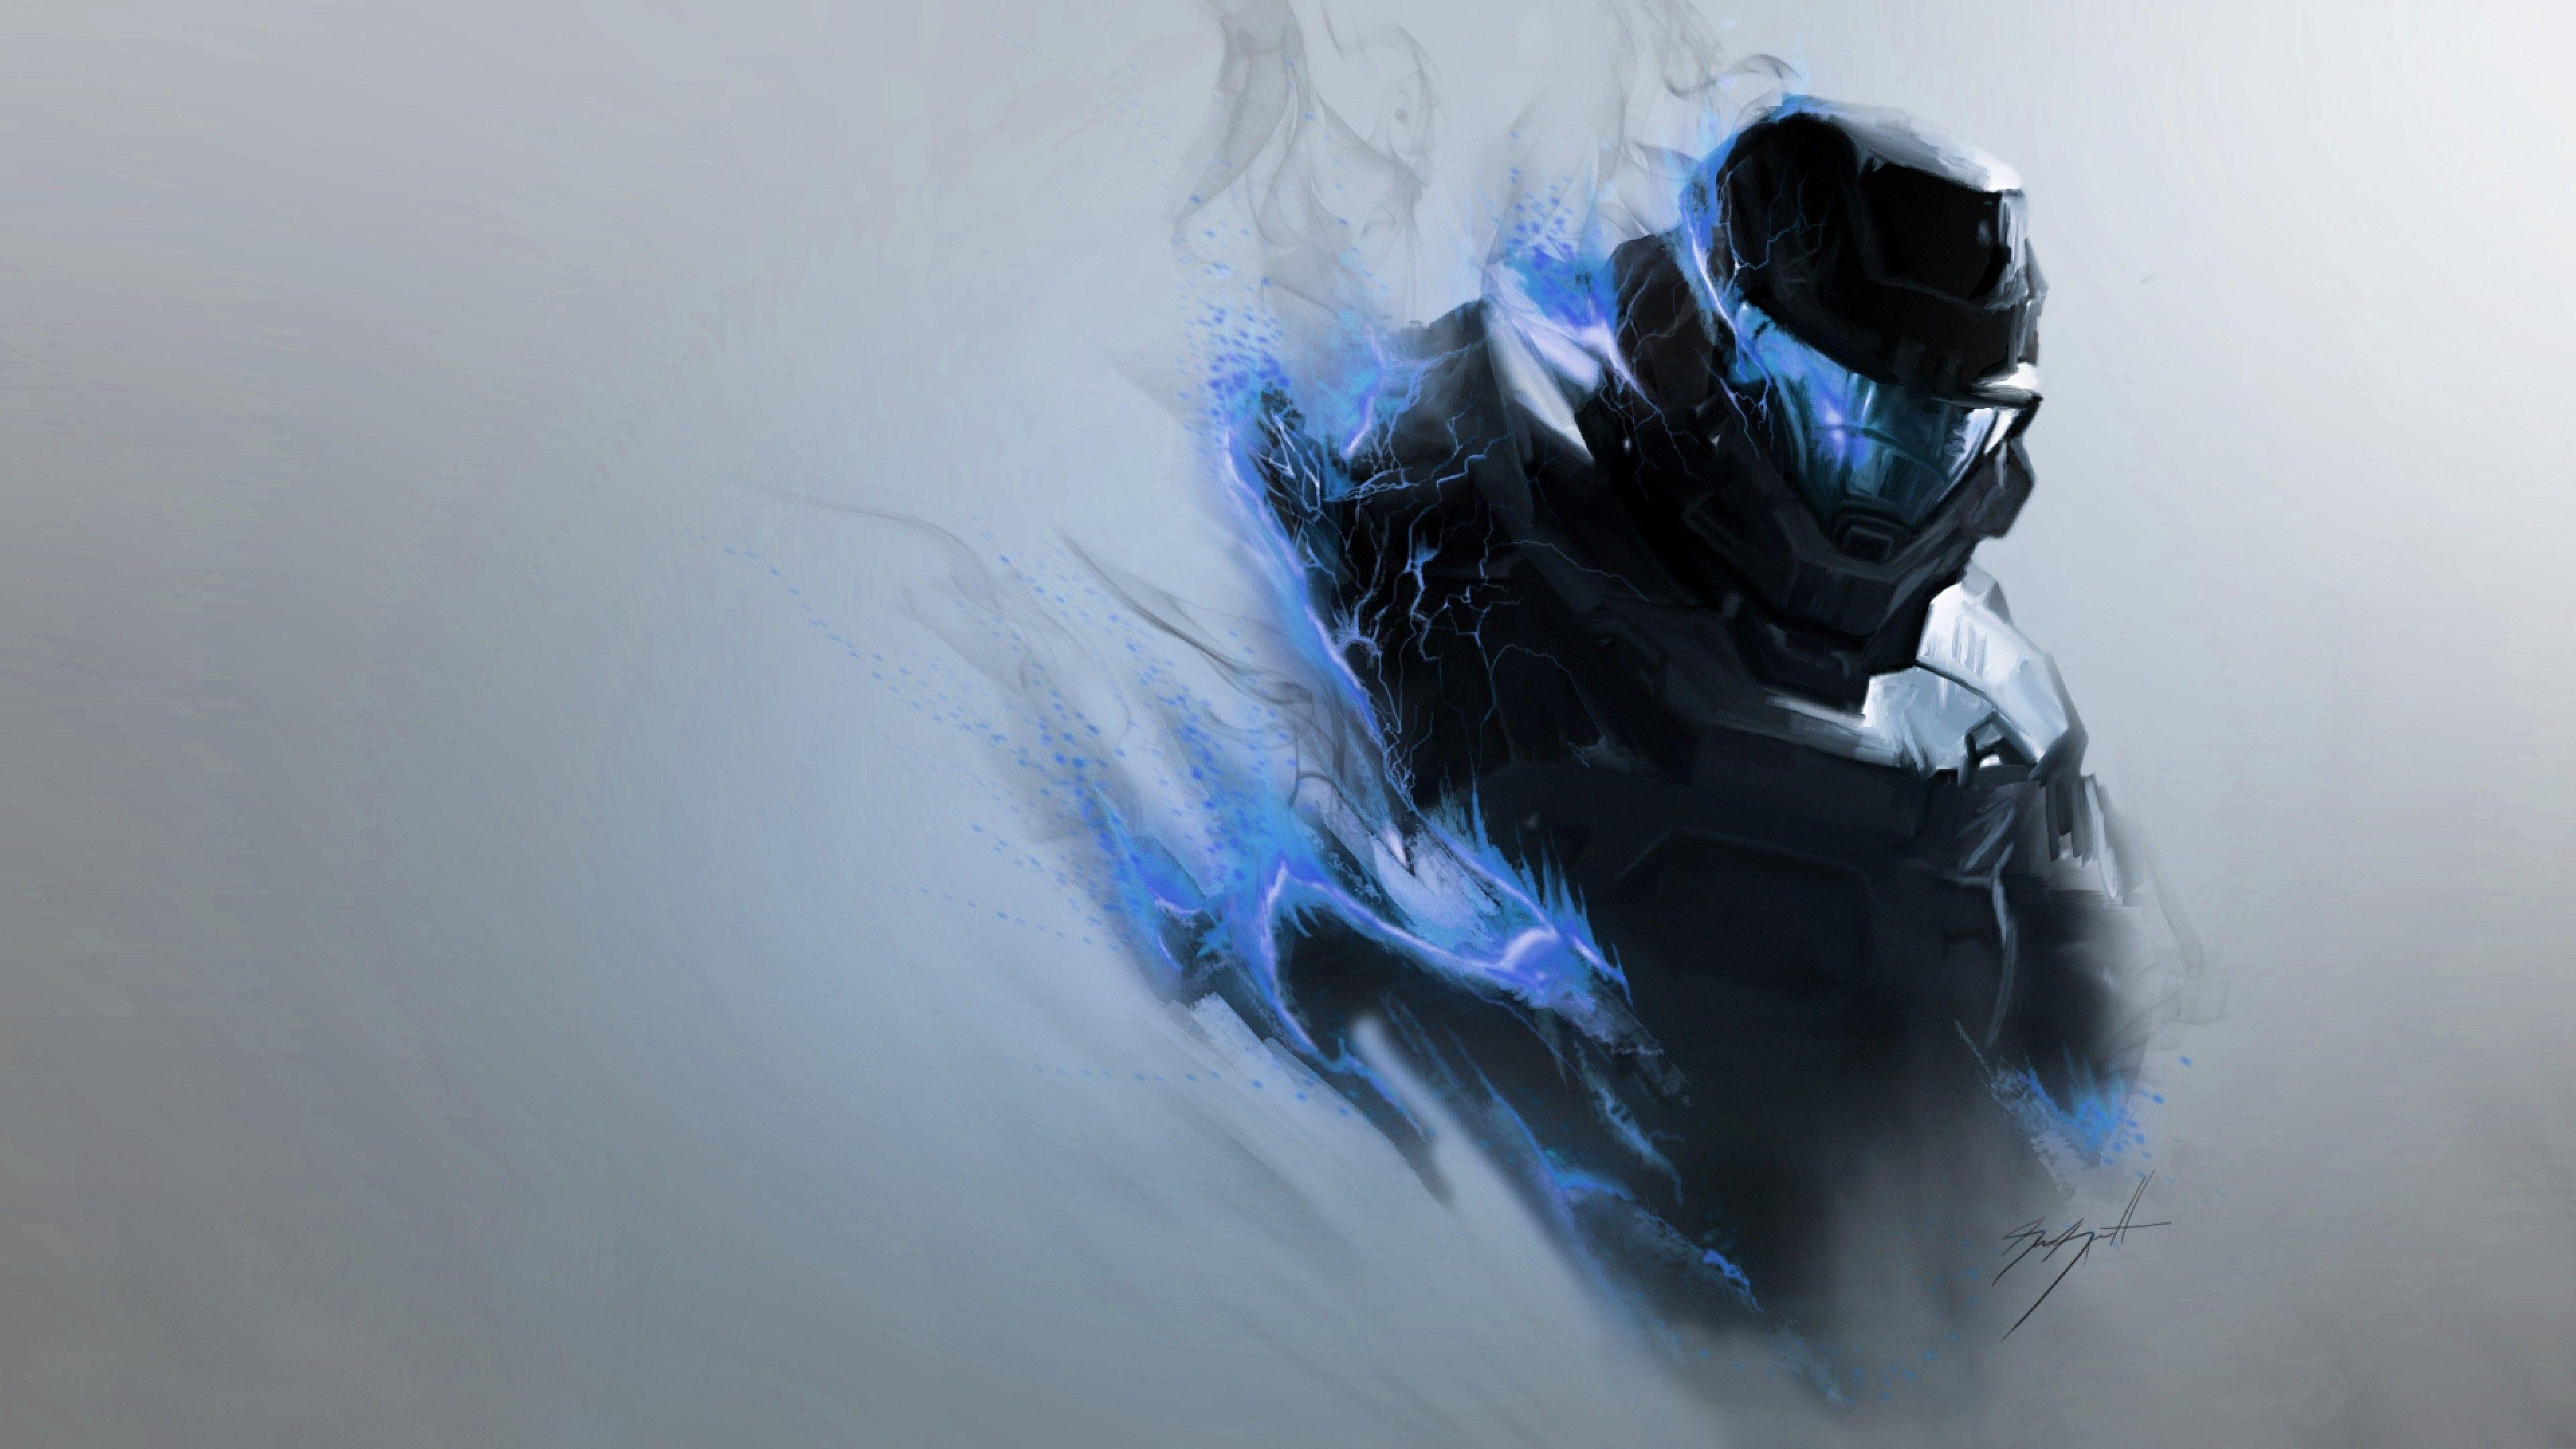 Wallpaper 3840x2160 Halo, Smoke, Armor, Soldier, Helmet 4K Ultra HD HD. Halo reach, Halo background, Halo game